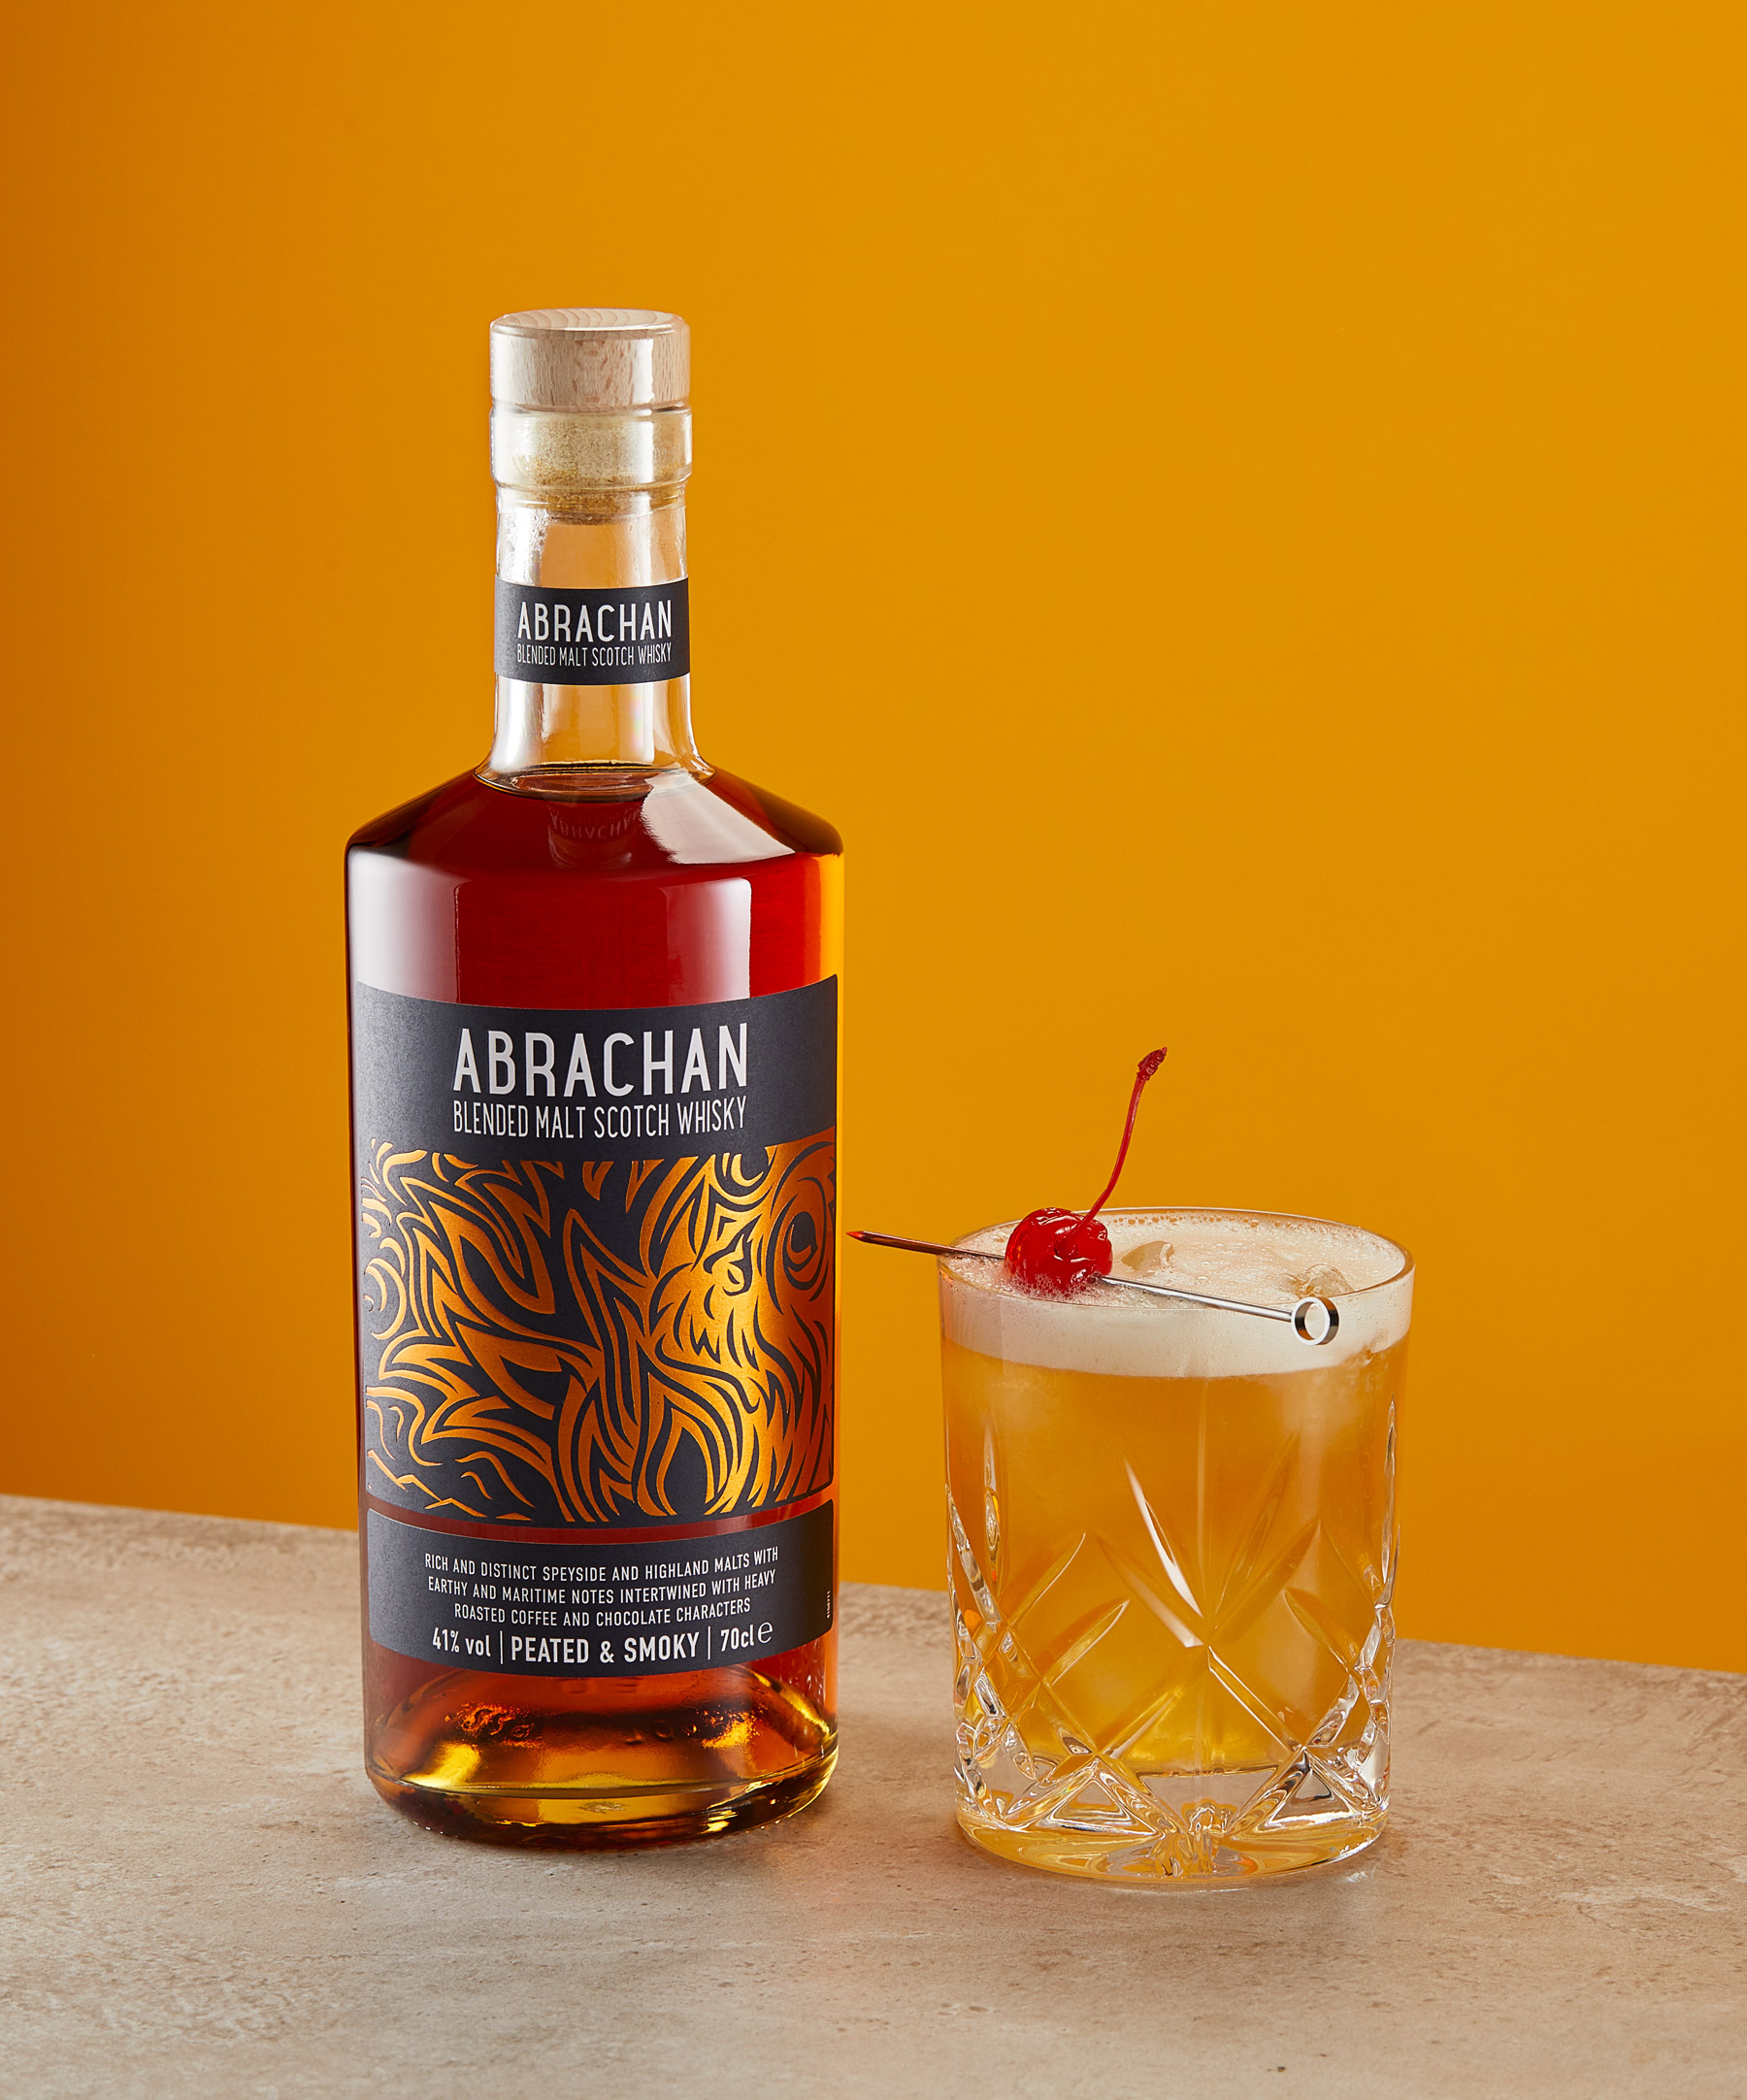 Abrachan Whisky Sour Cocktail for @lidlgb, drinks photographer Alastair Ferrier